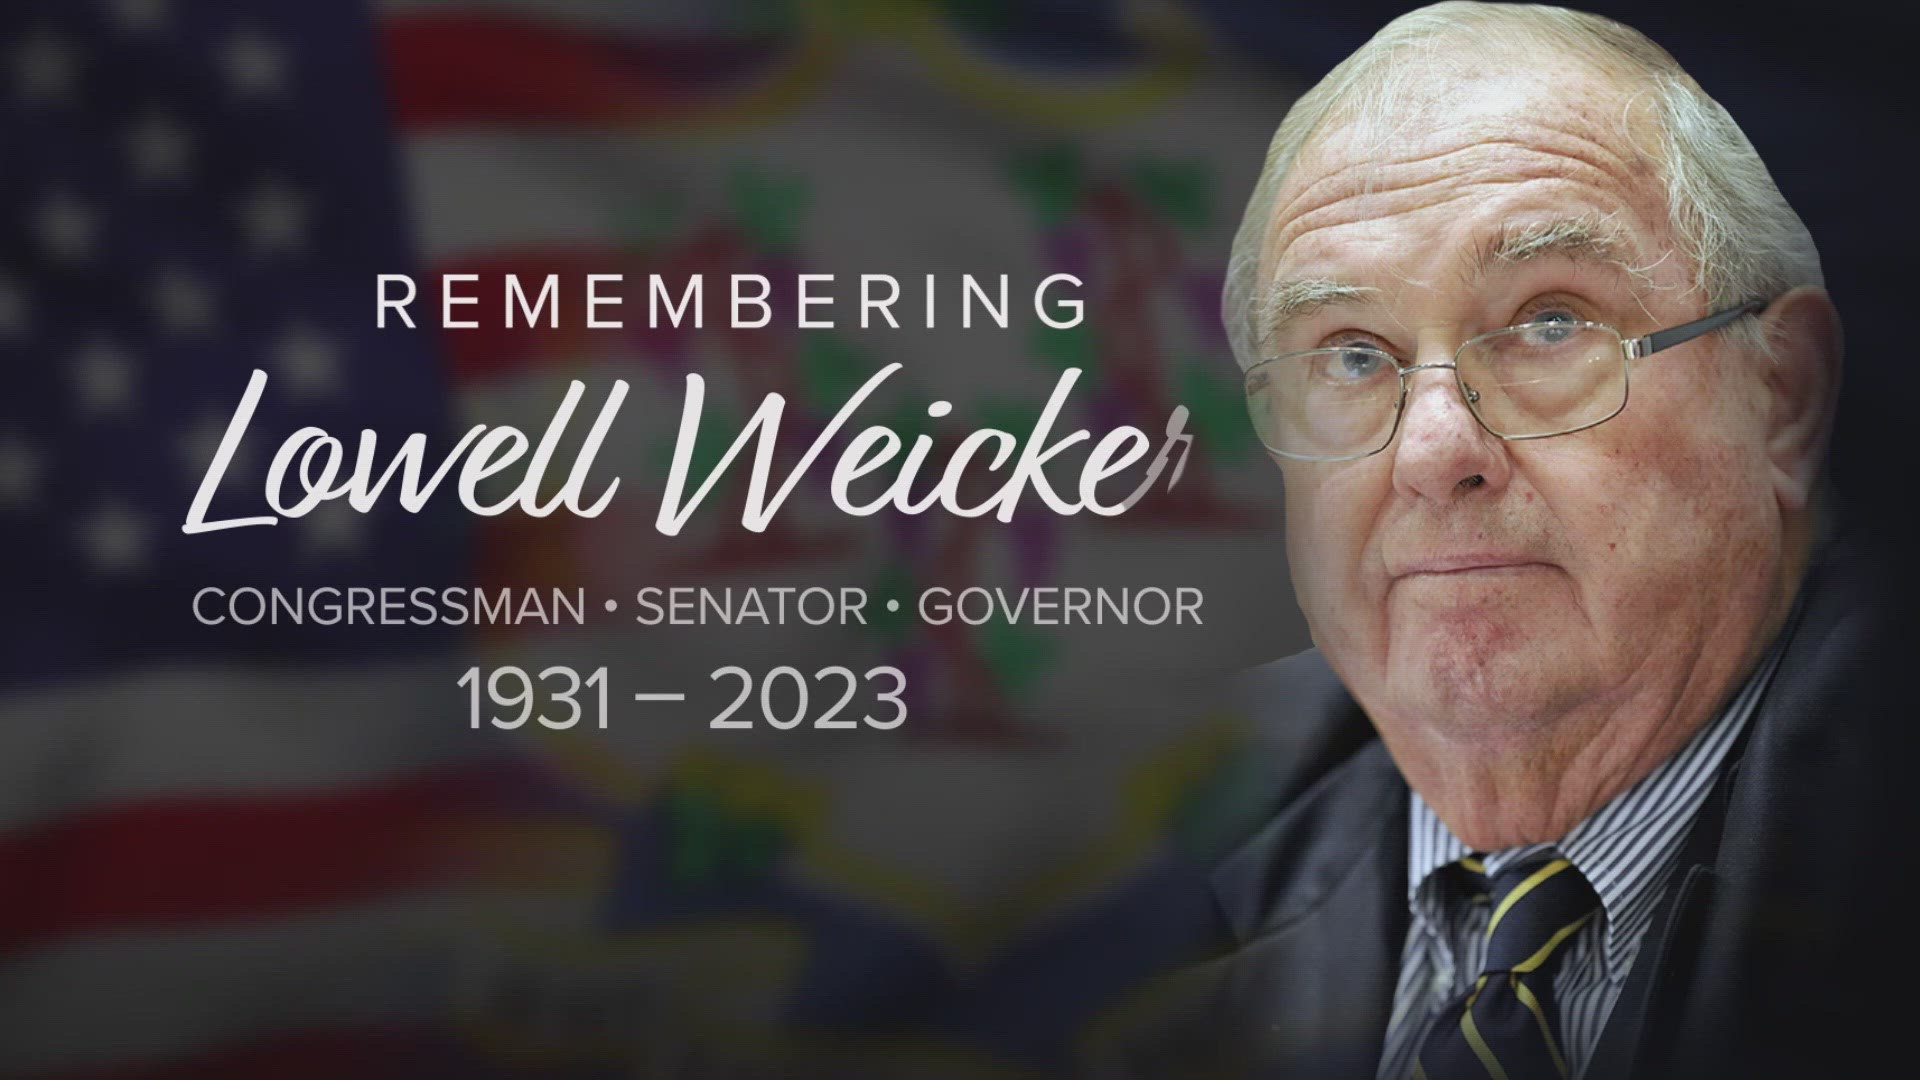 A political maverick, Weicker died this week at 92.